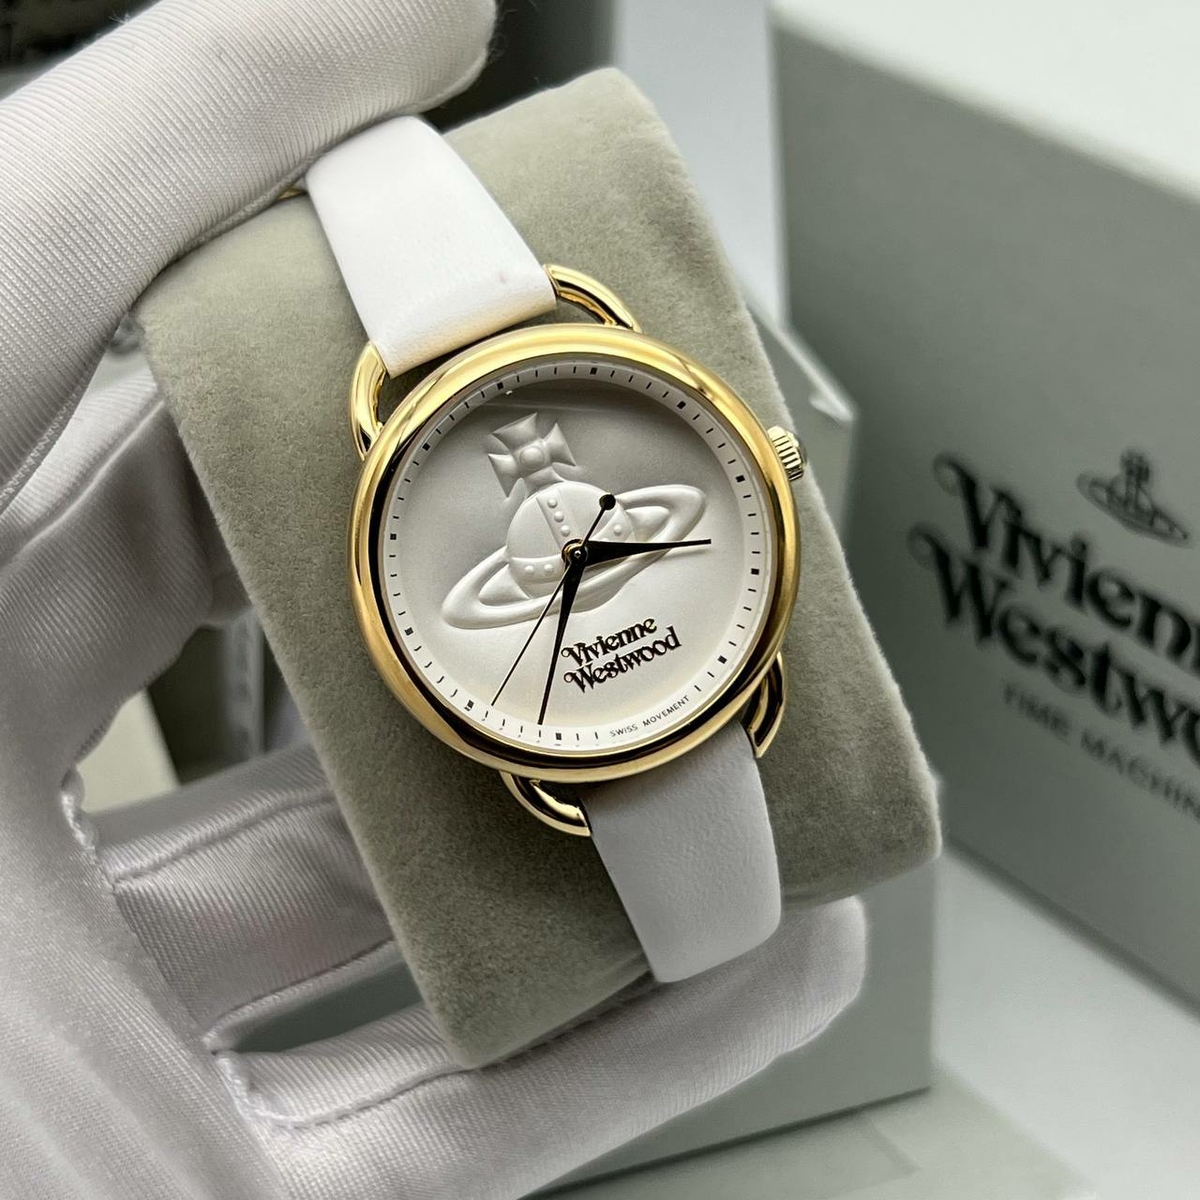 Vivienne Westwood часы #1 в «Globestyle» арт.262673QW